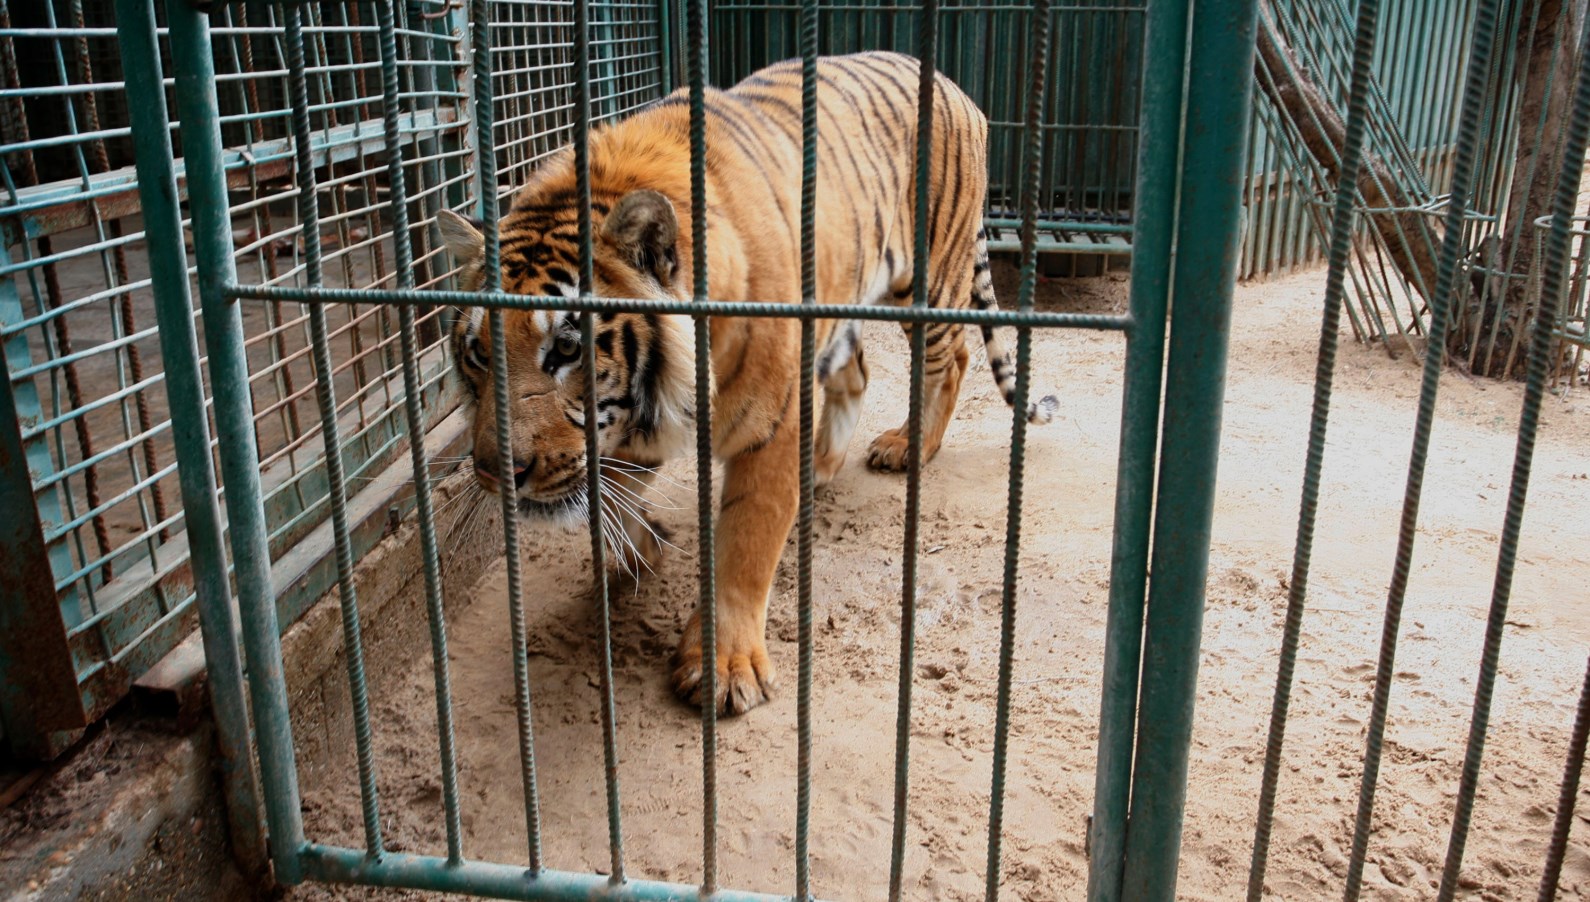 South American tiger in a Gaza zoo. Photo by Abed Rahim Khatib/FLASH90